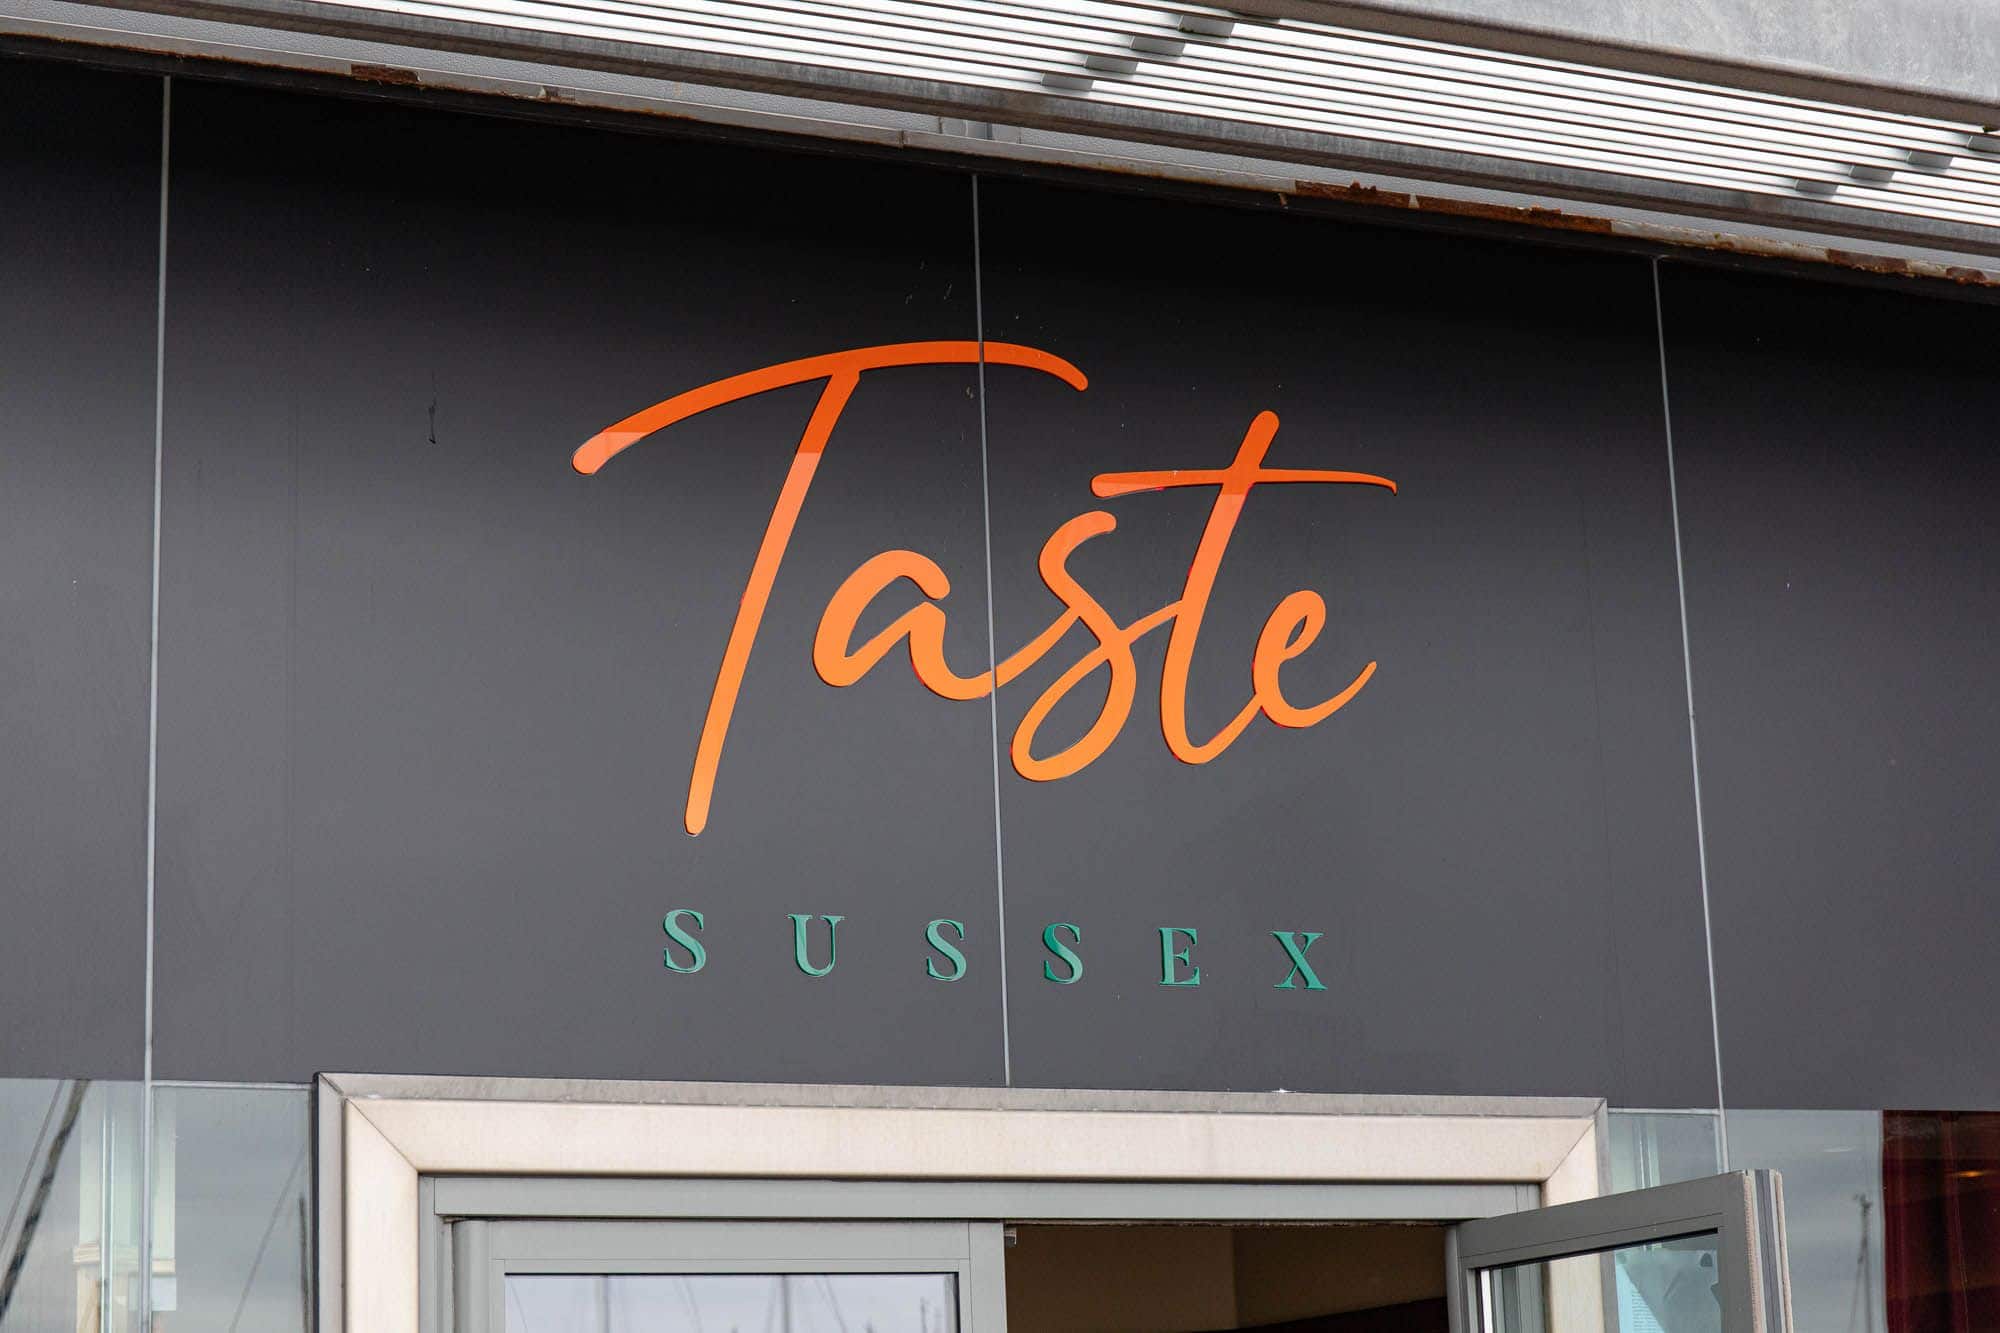 taste sussex logo above the enterance door